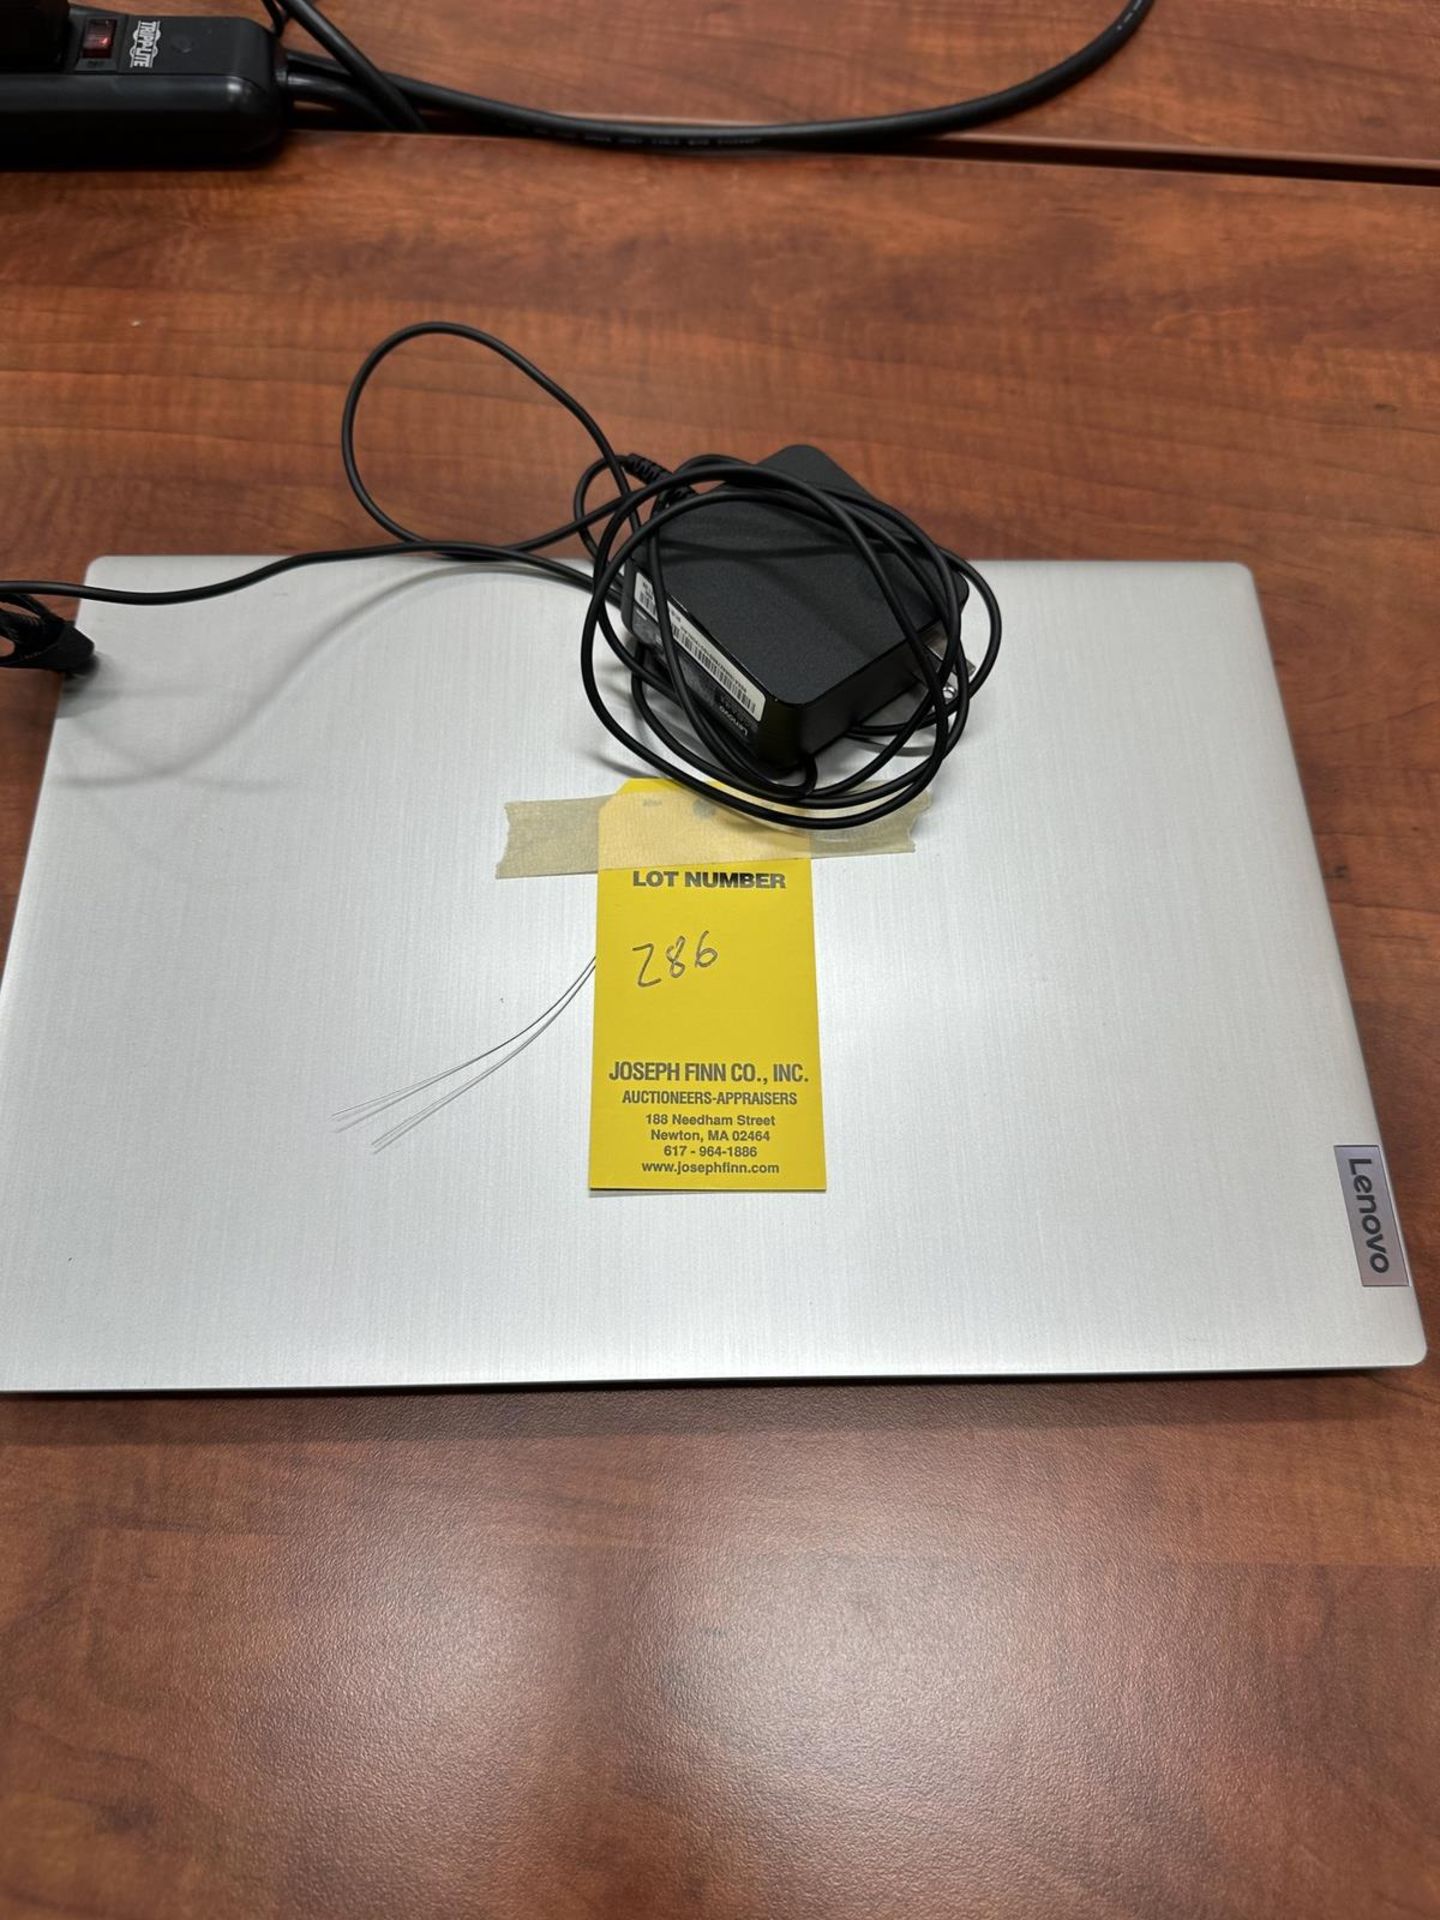 Lenovo Laptop | Rig Fee $15